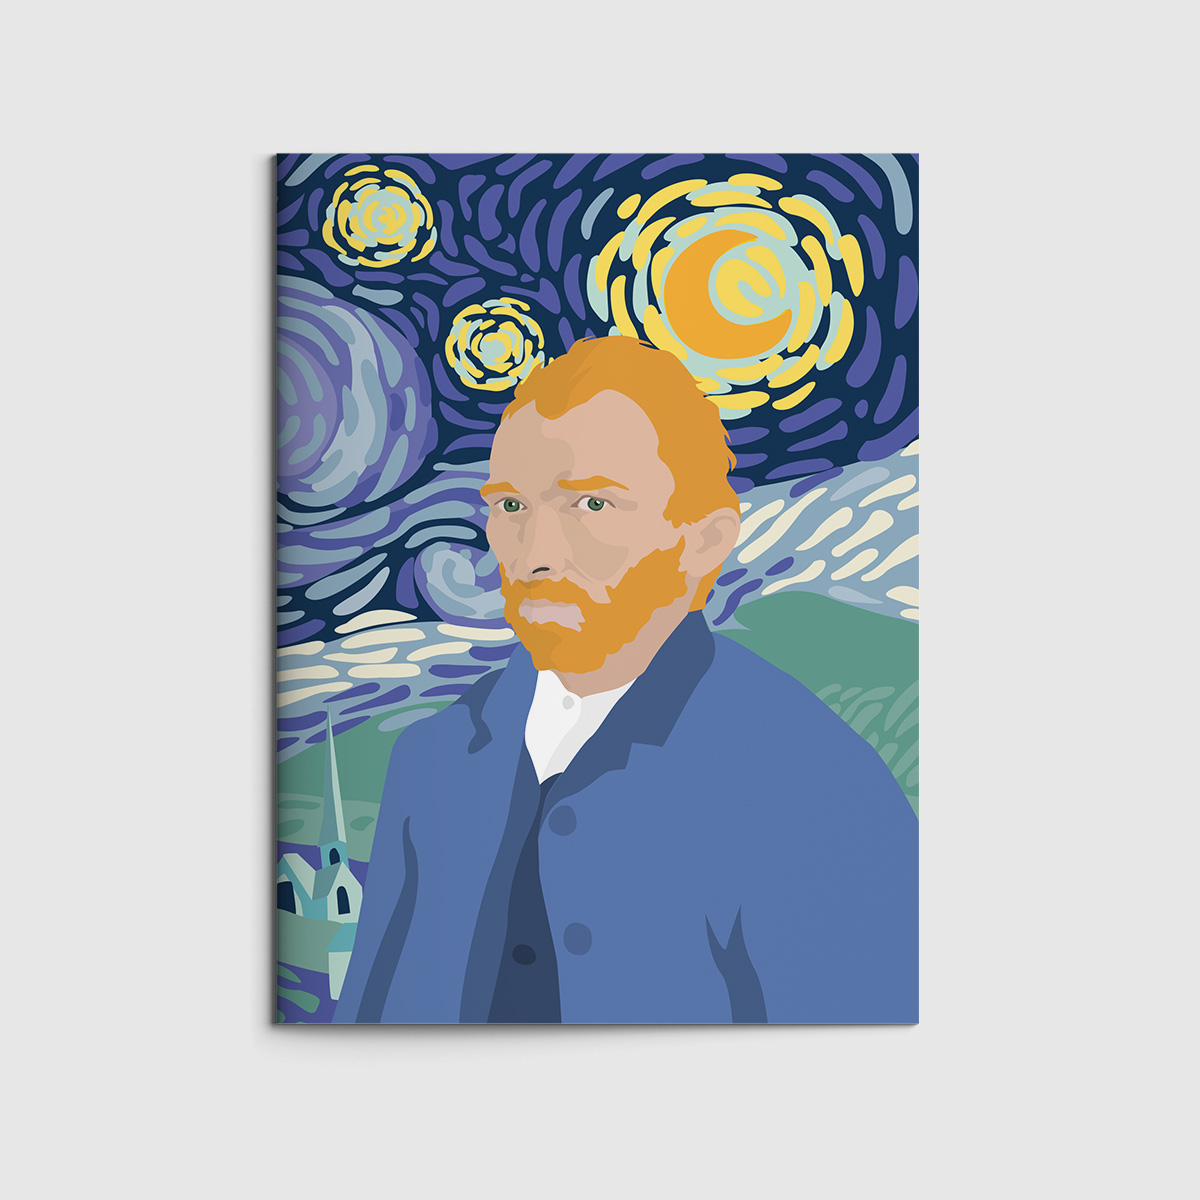 Heft A6 - Vincent van Gogh "starry night"